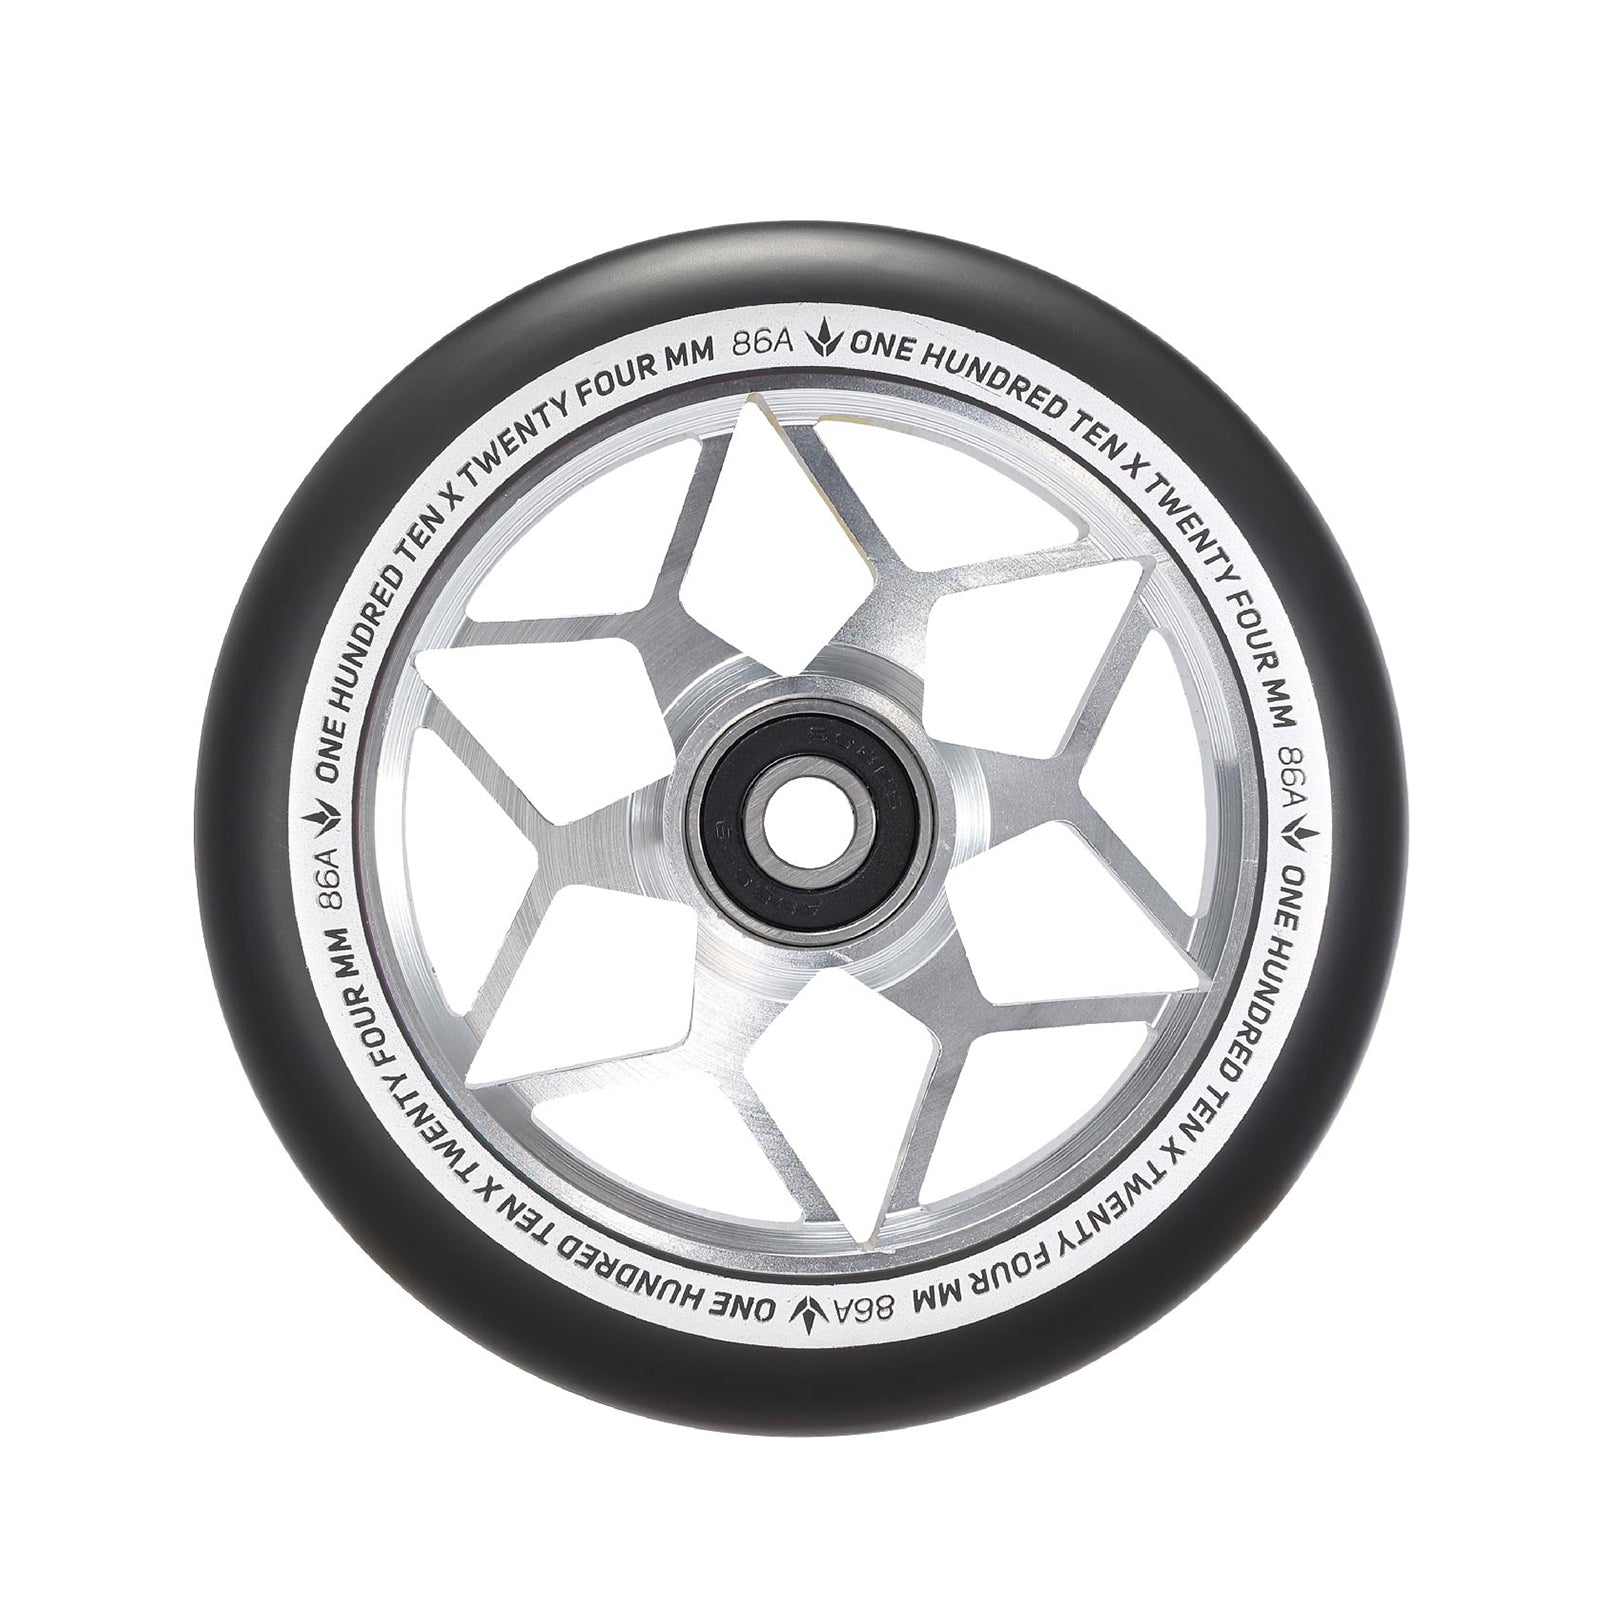 Envy Diamond Wheels - 110mm (9 couleurs)